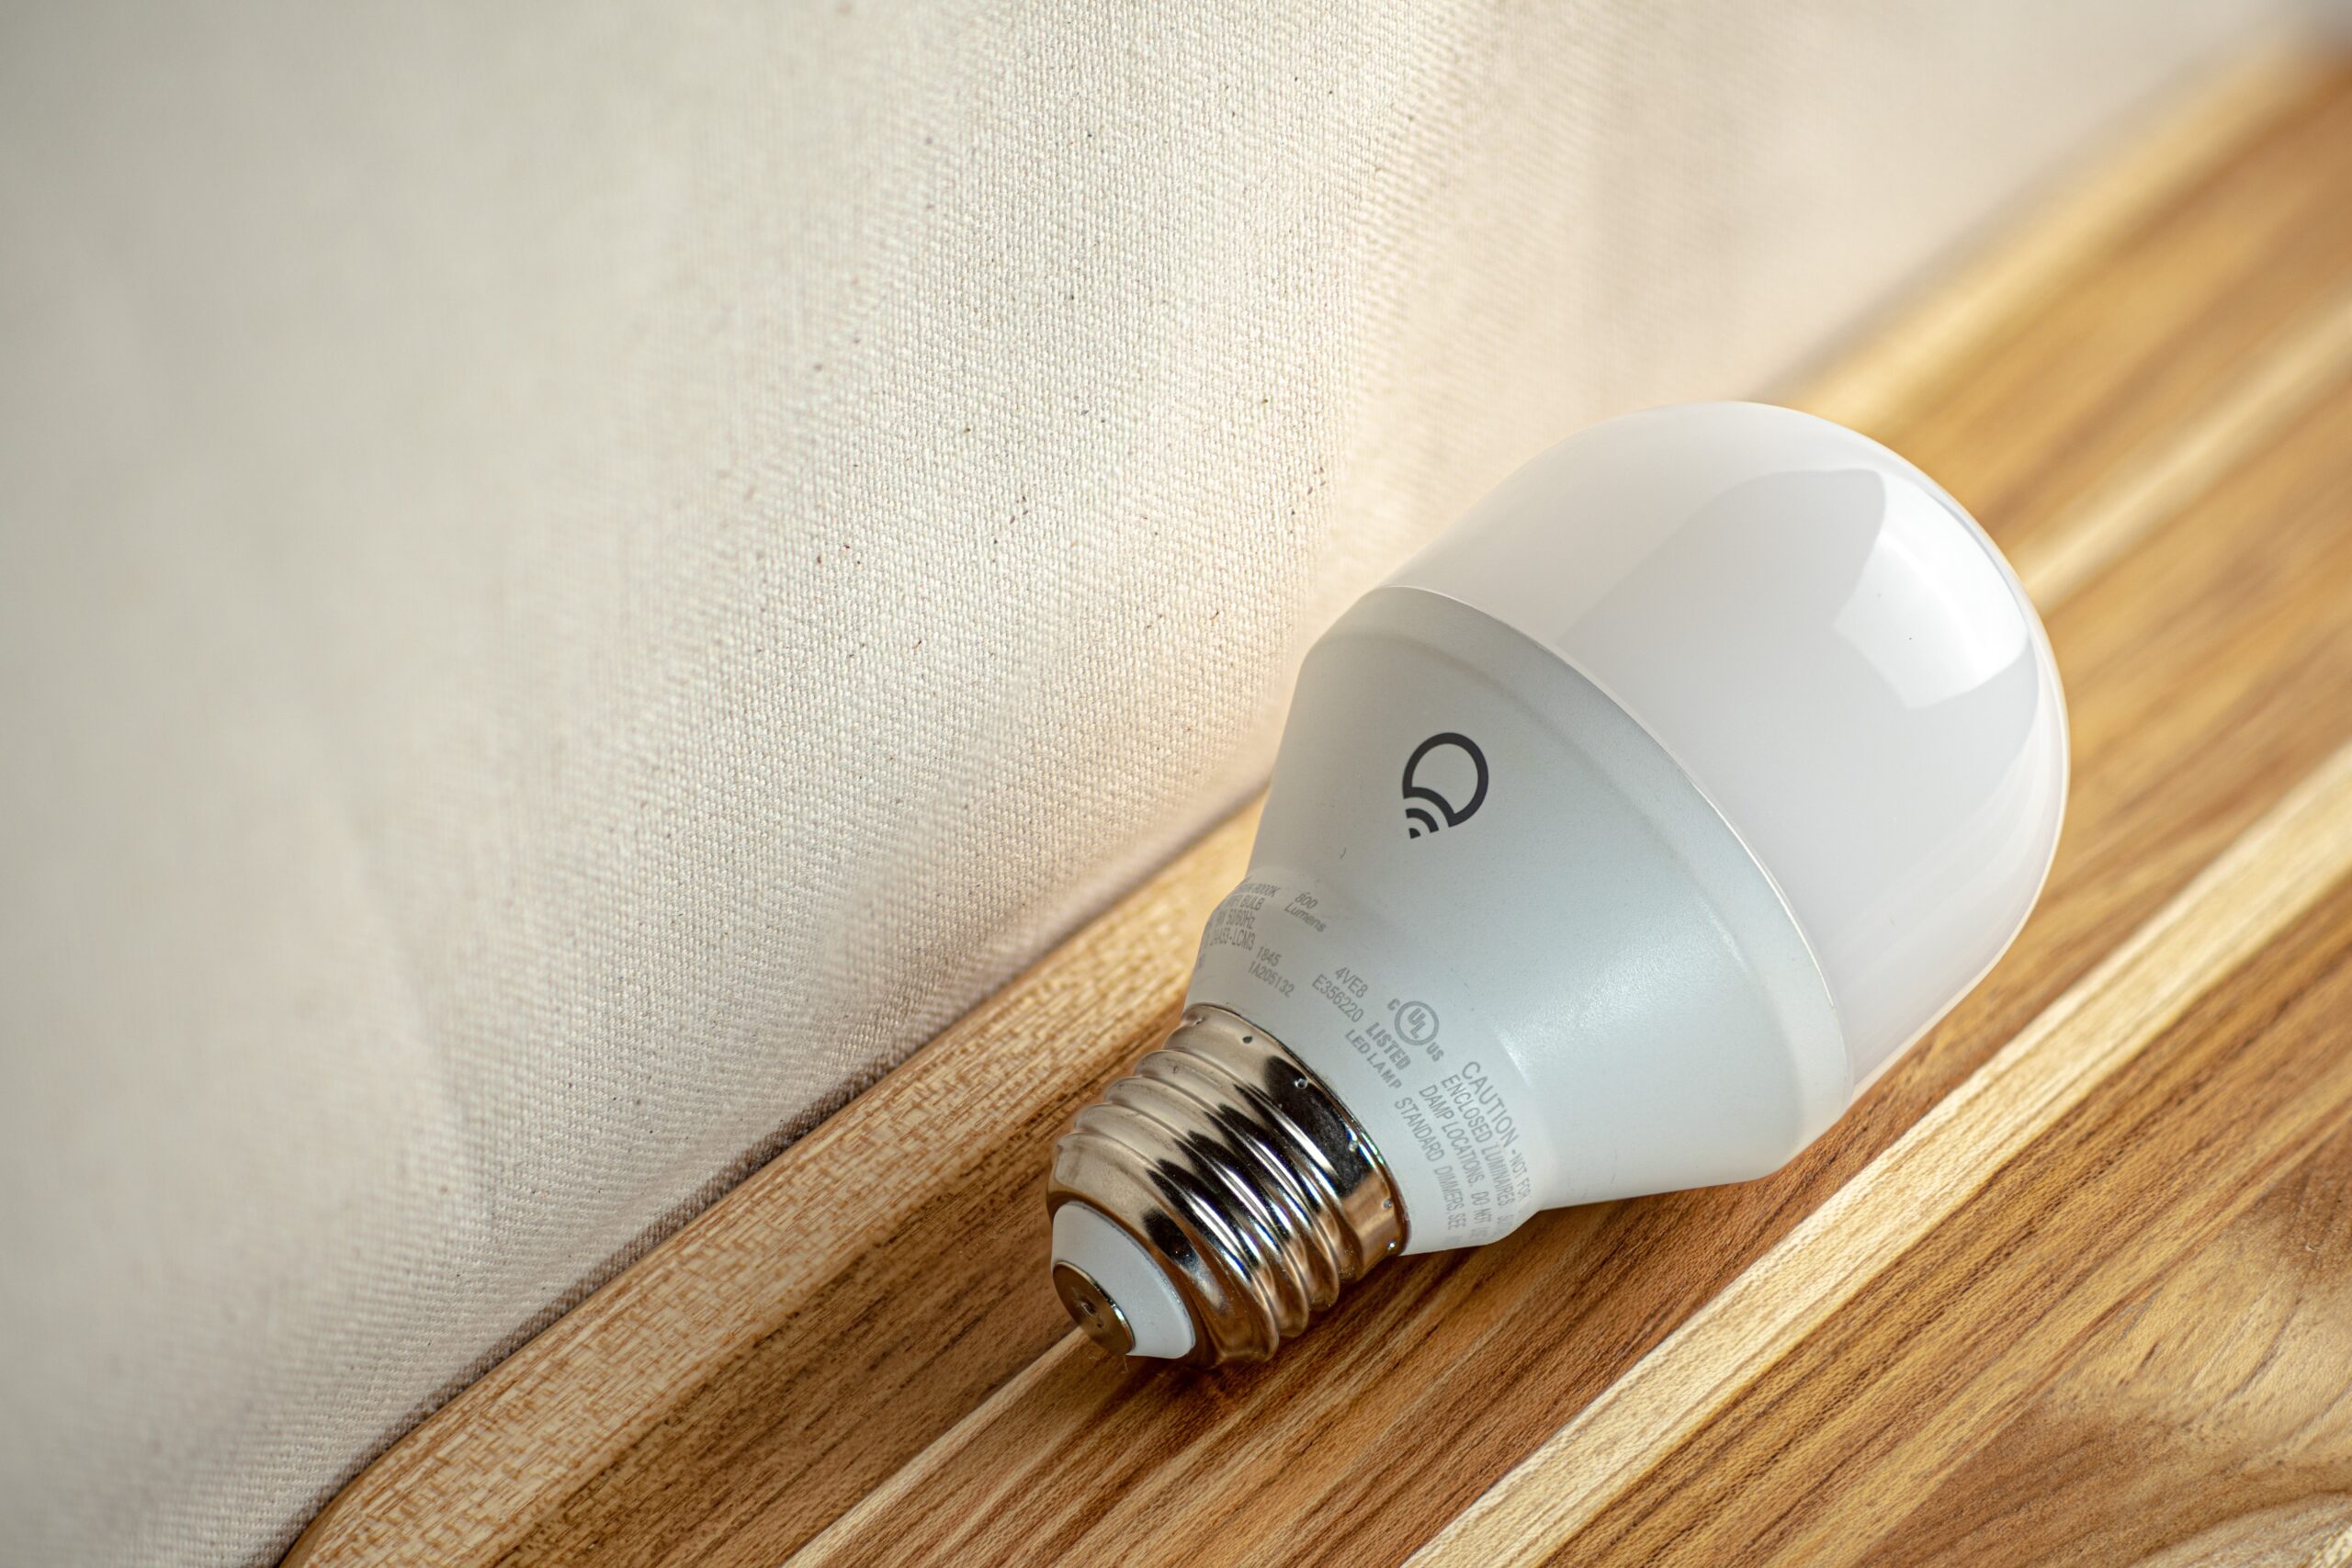 LIFX smart light bulb